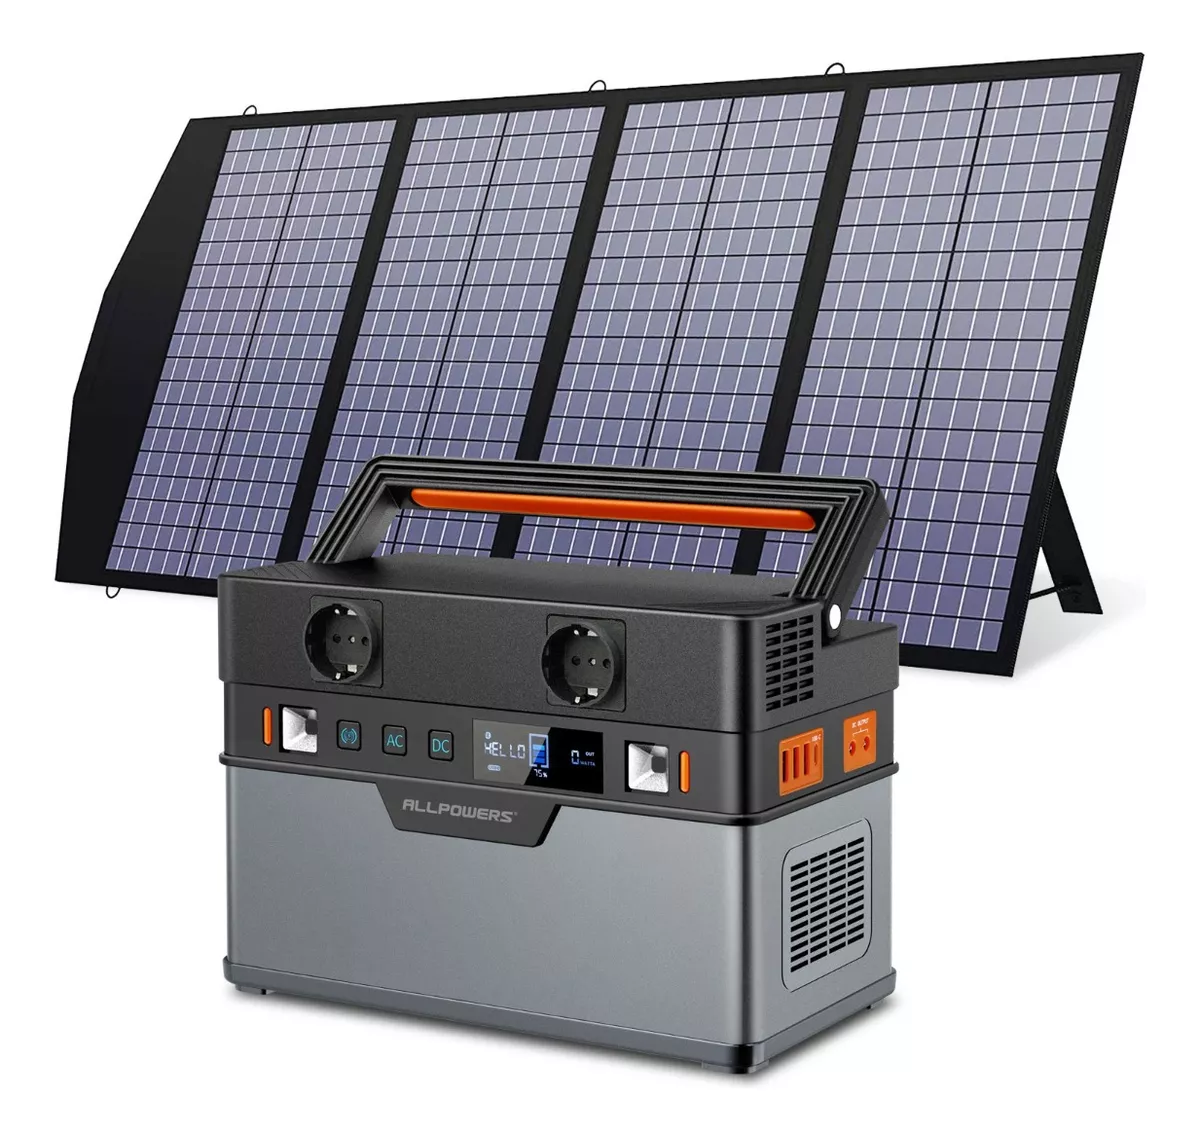 Allpowers Solar Generator, 110v/220v Portable Power Station,